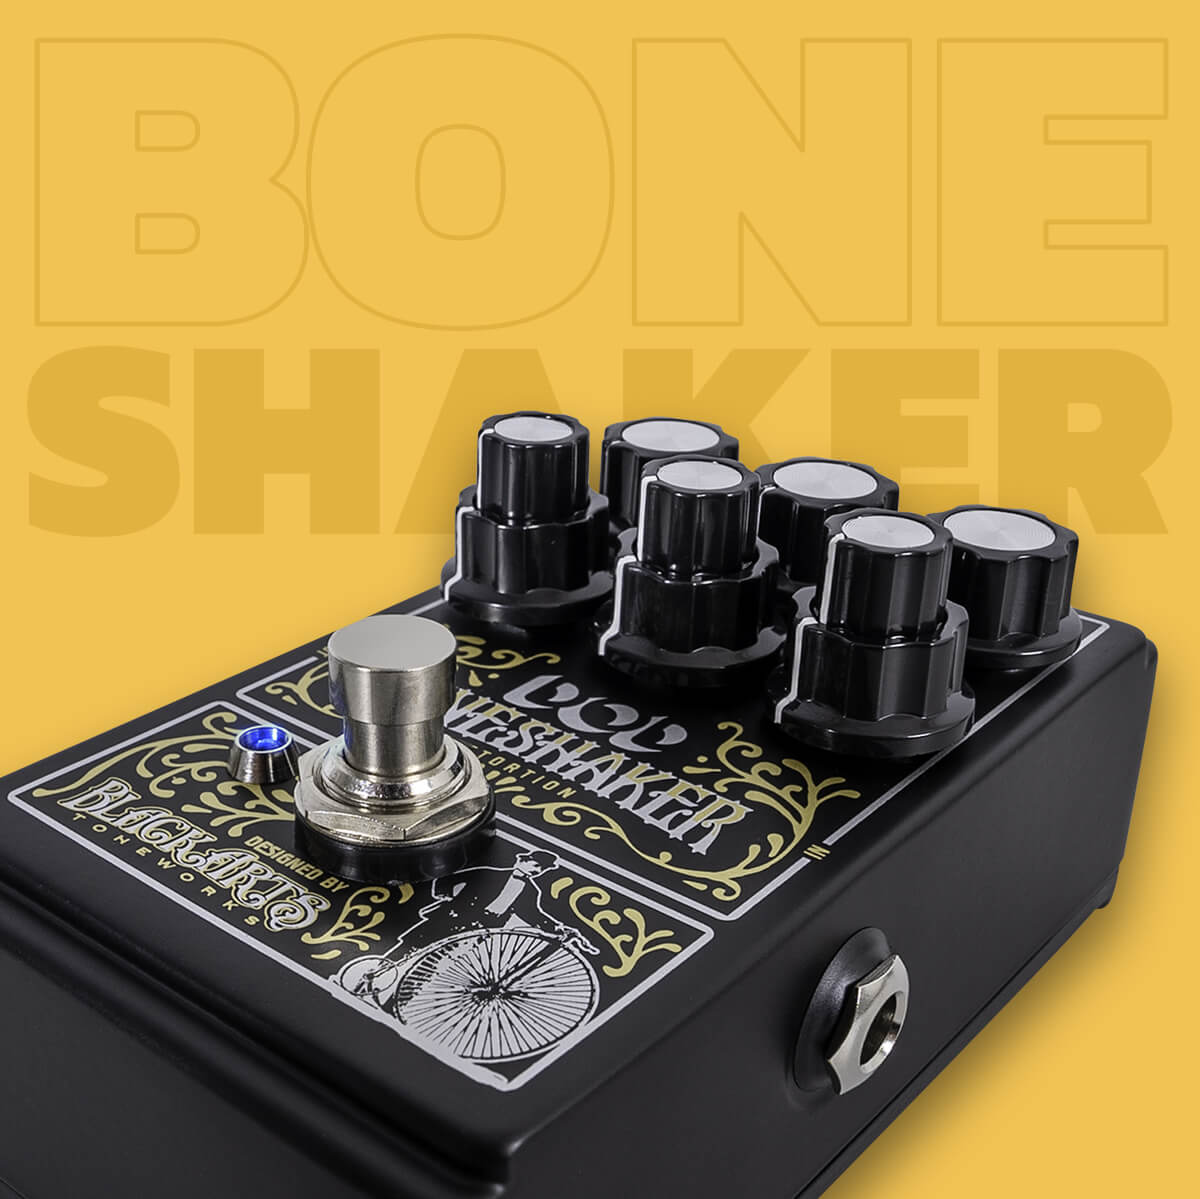 DOD Boneshaker distortion guitar pedal